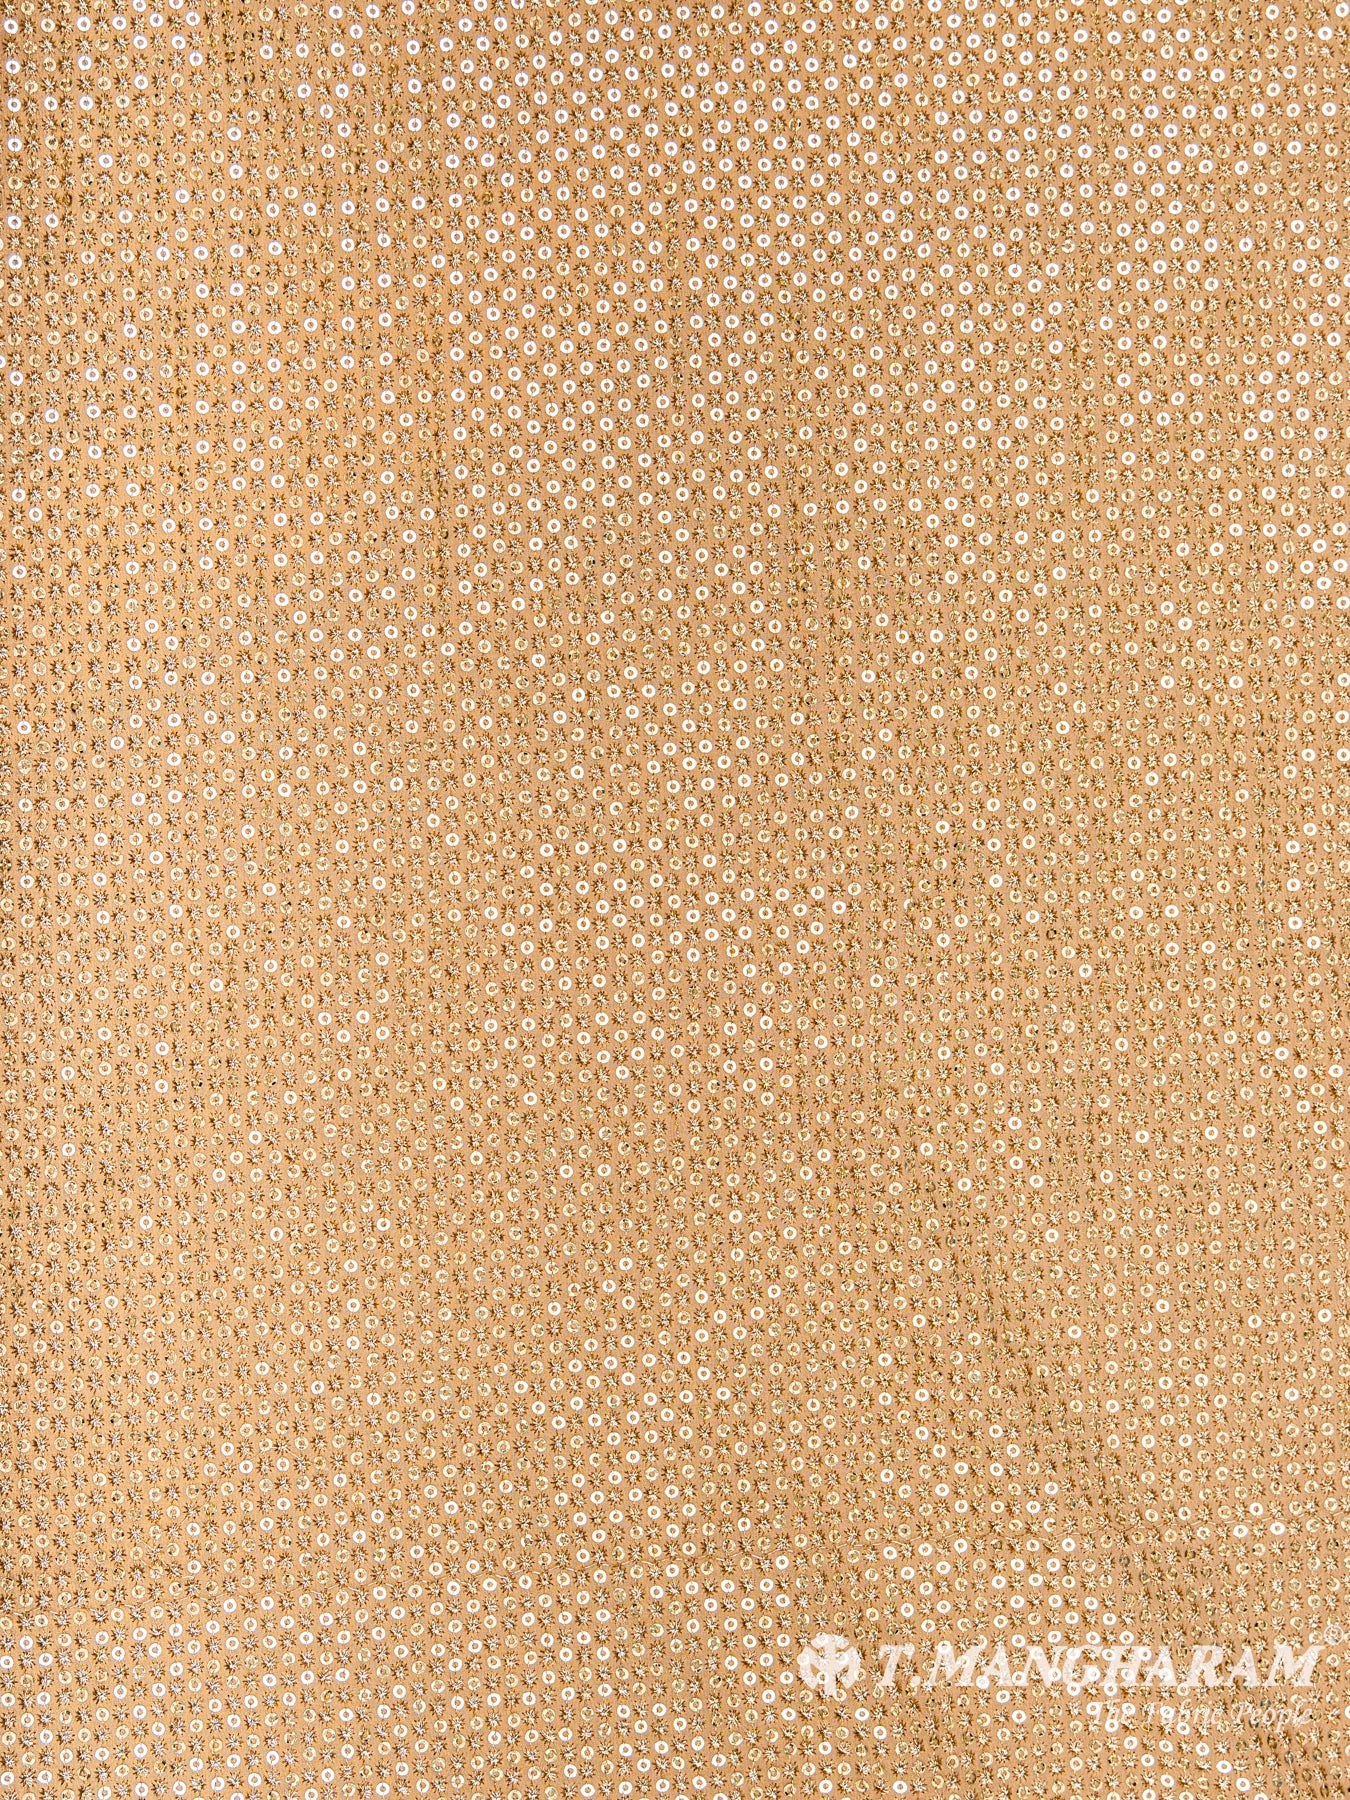 Gold Fancy Georgette Fabric - EC6103 view-3